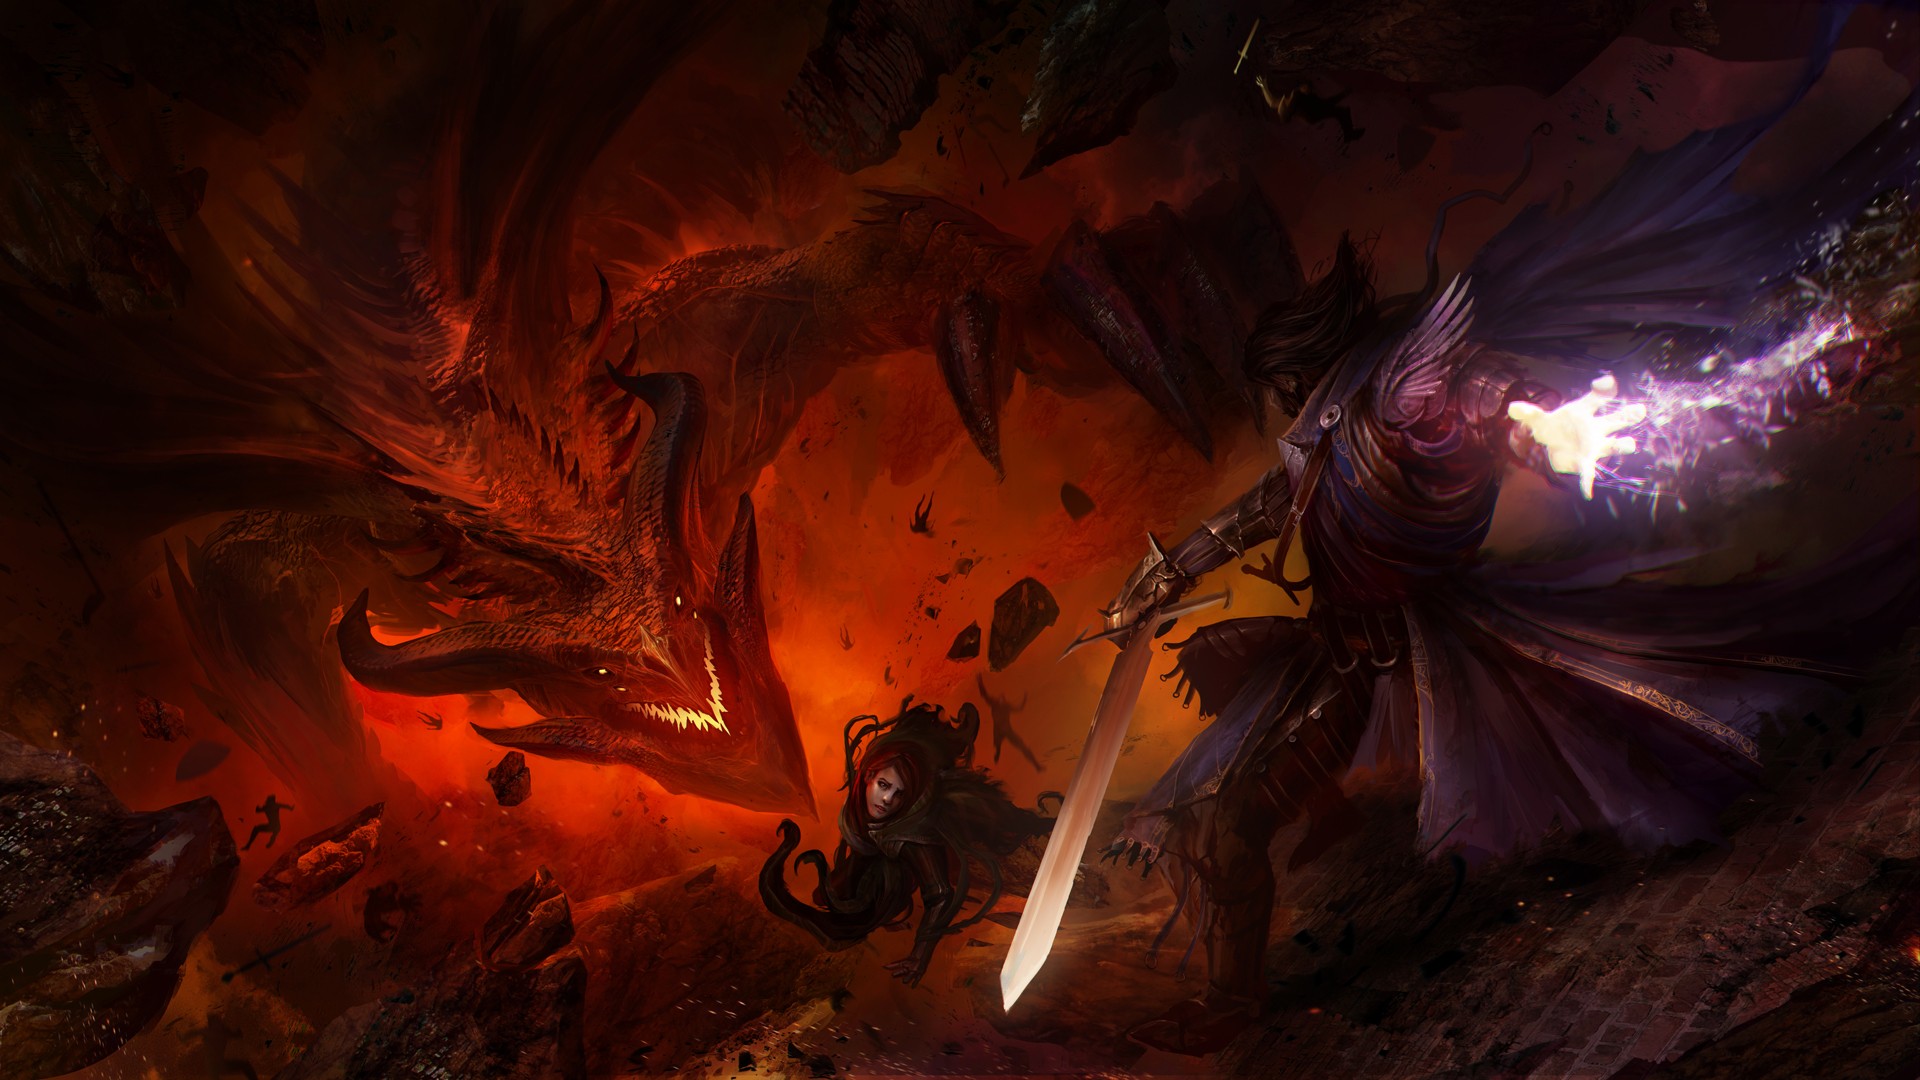 General 1920x1080 dragon warrior knight Guild Wars magic sword cape PC gaming video game art fantasy art artwork creature